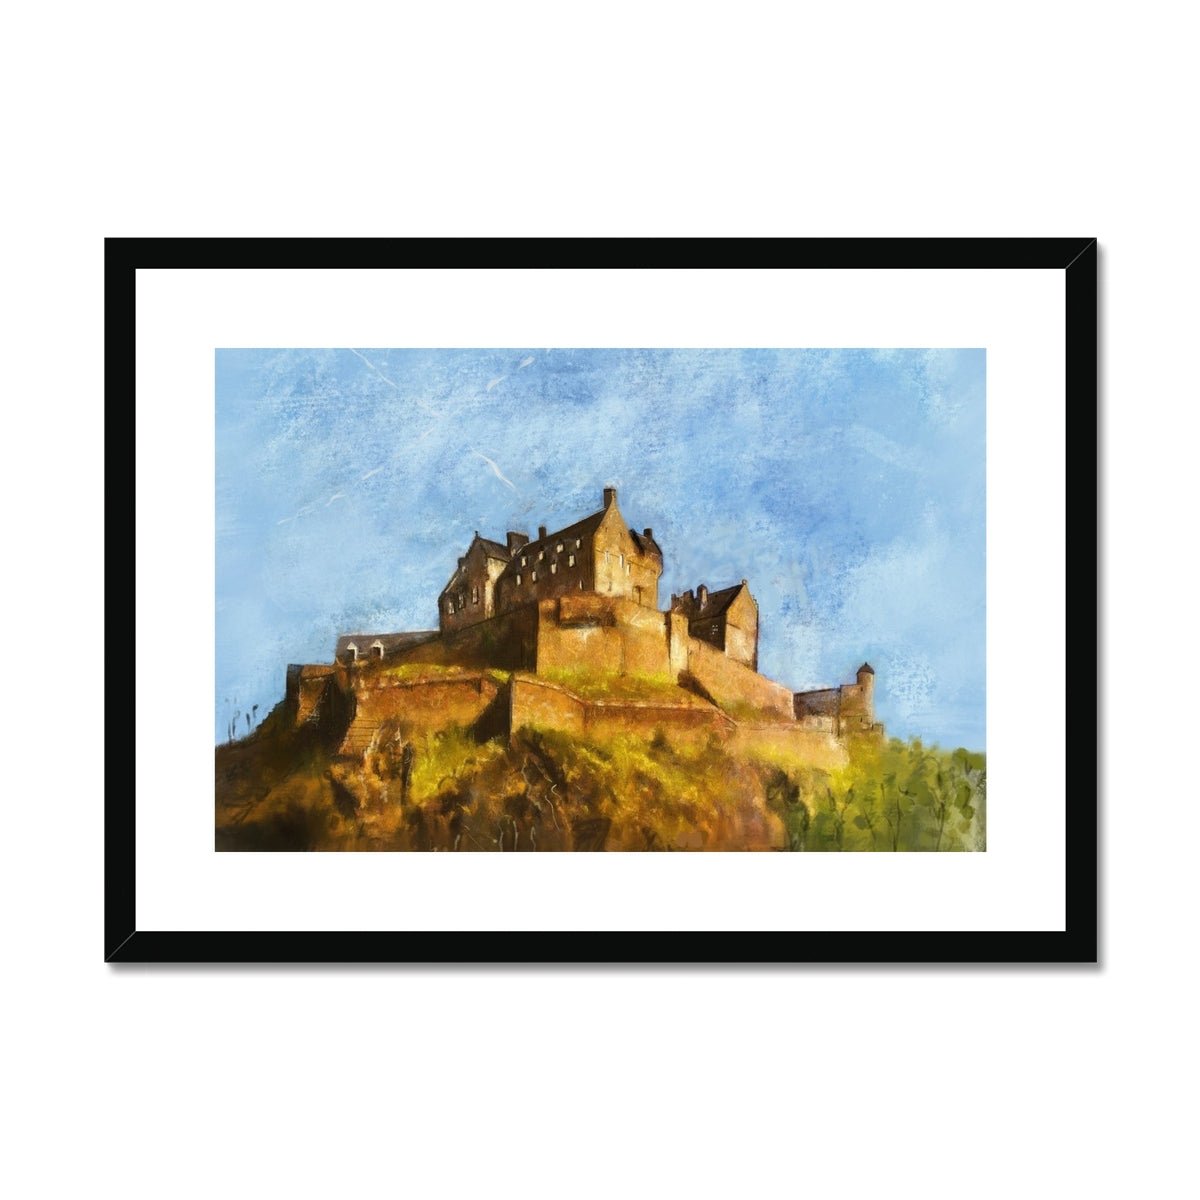 Edinburgh Castle Painting | Framed & Mounted Prints From Scotland-Framed & Mounted Prints-Edinburgh & Glasgow Art Gallery-A2 Landscape-Black Frame-Paintings, Prints, Homeware, Art Gifts From Scotland By Scottish Artist Kevin Hunter